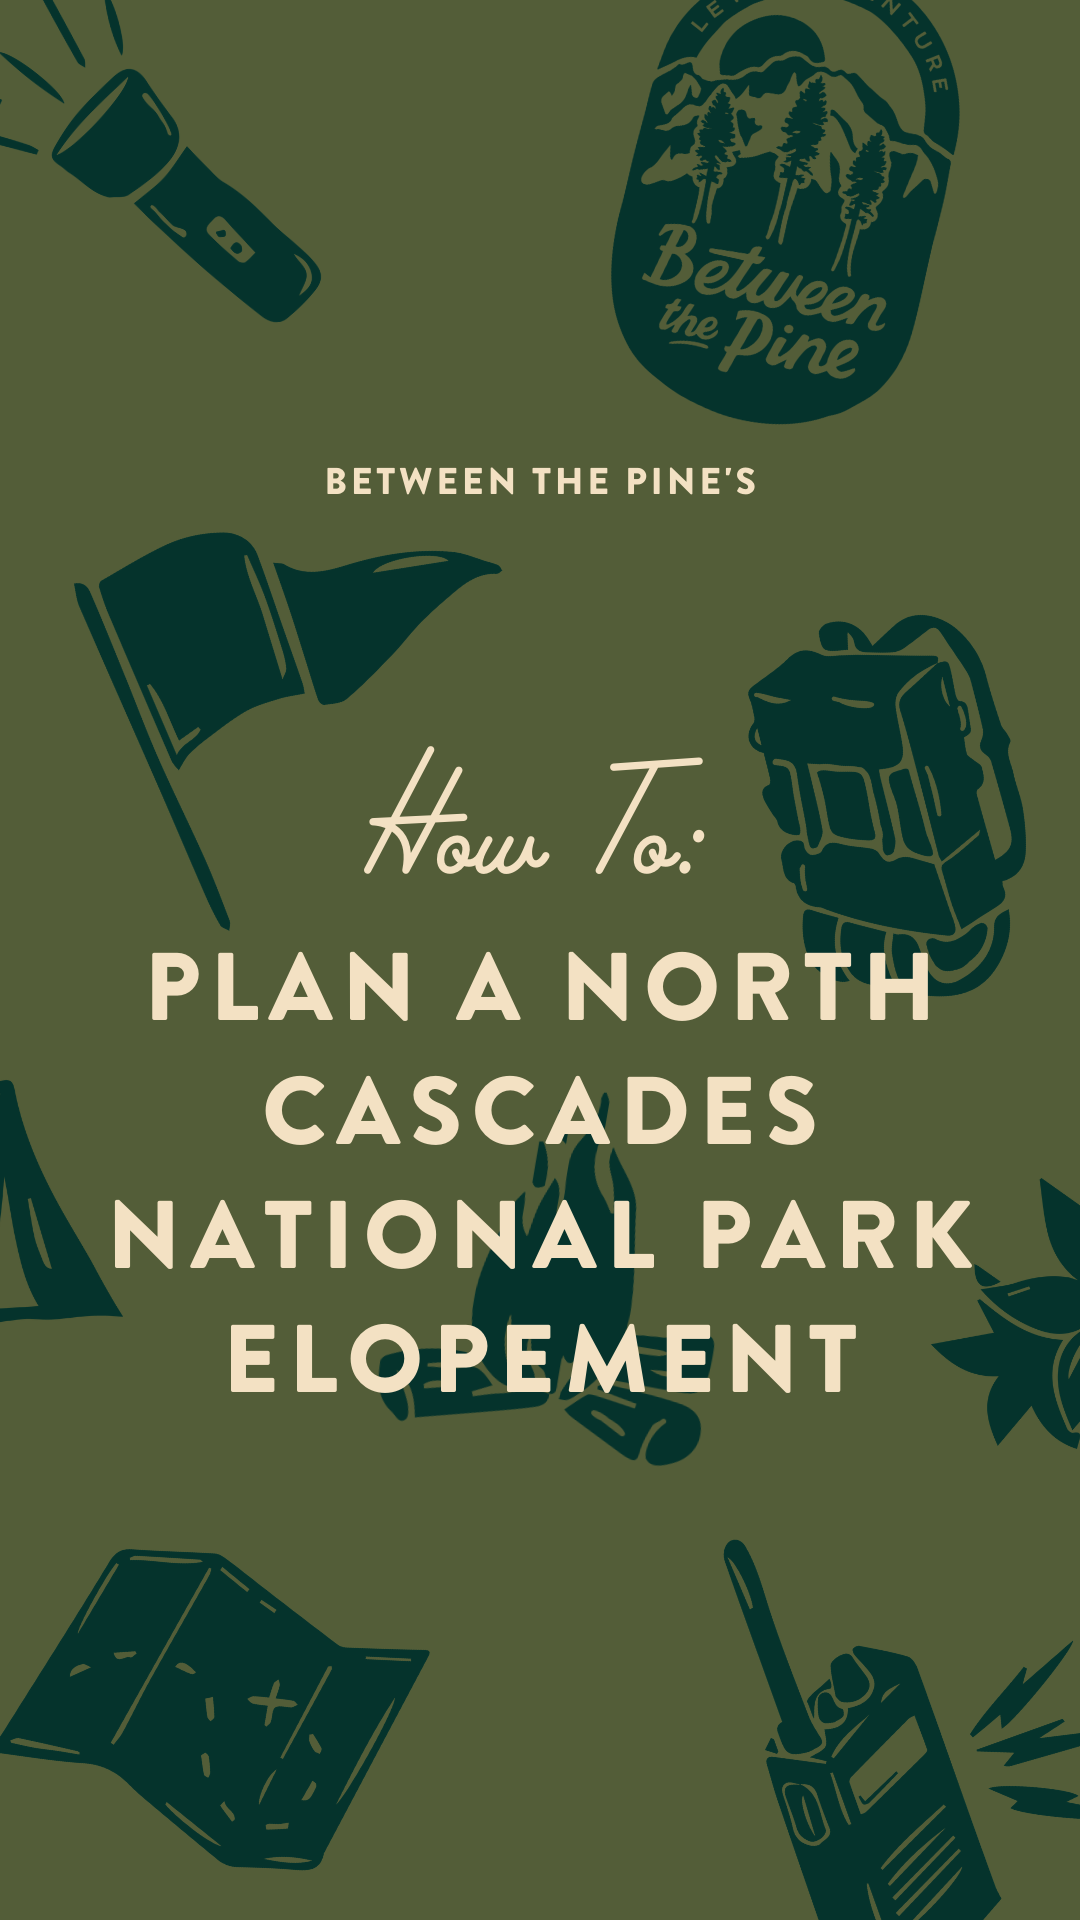 North Cascades National Park Elopement | Between the Pine adventure wedding photographer